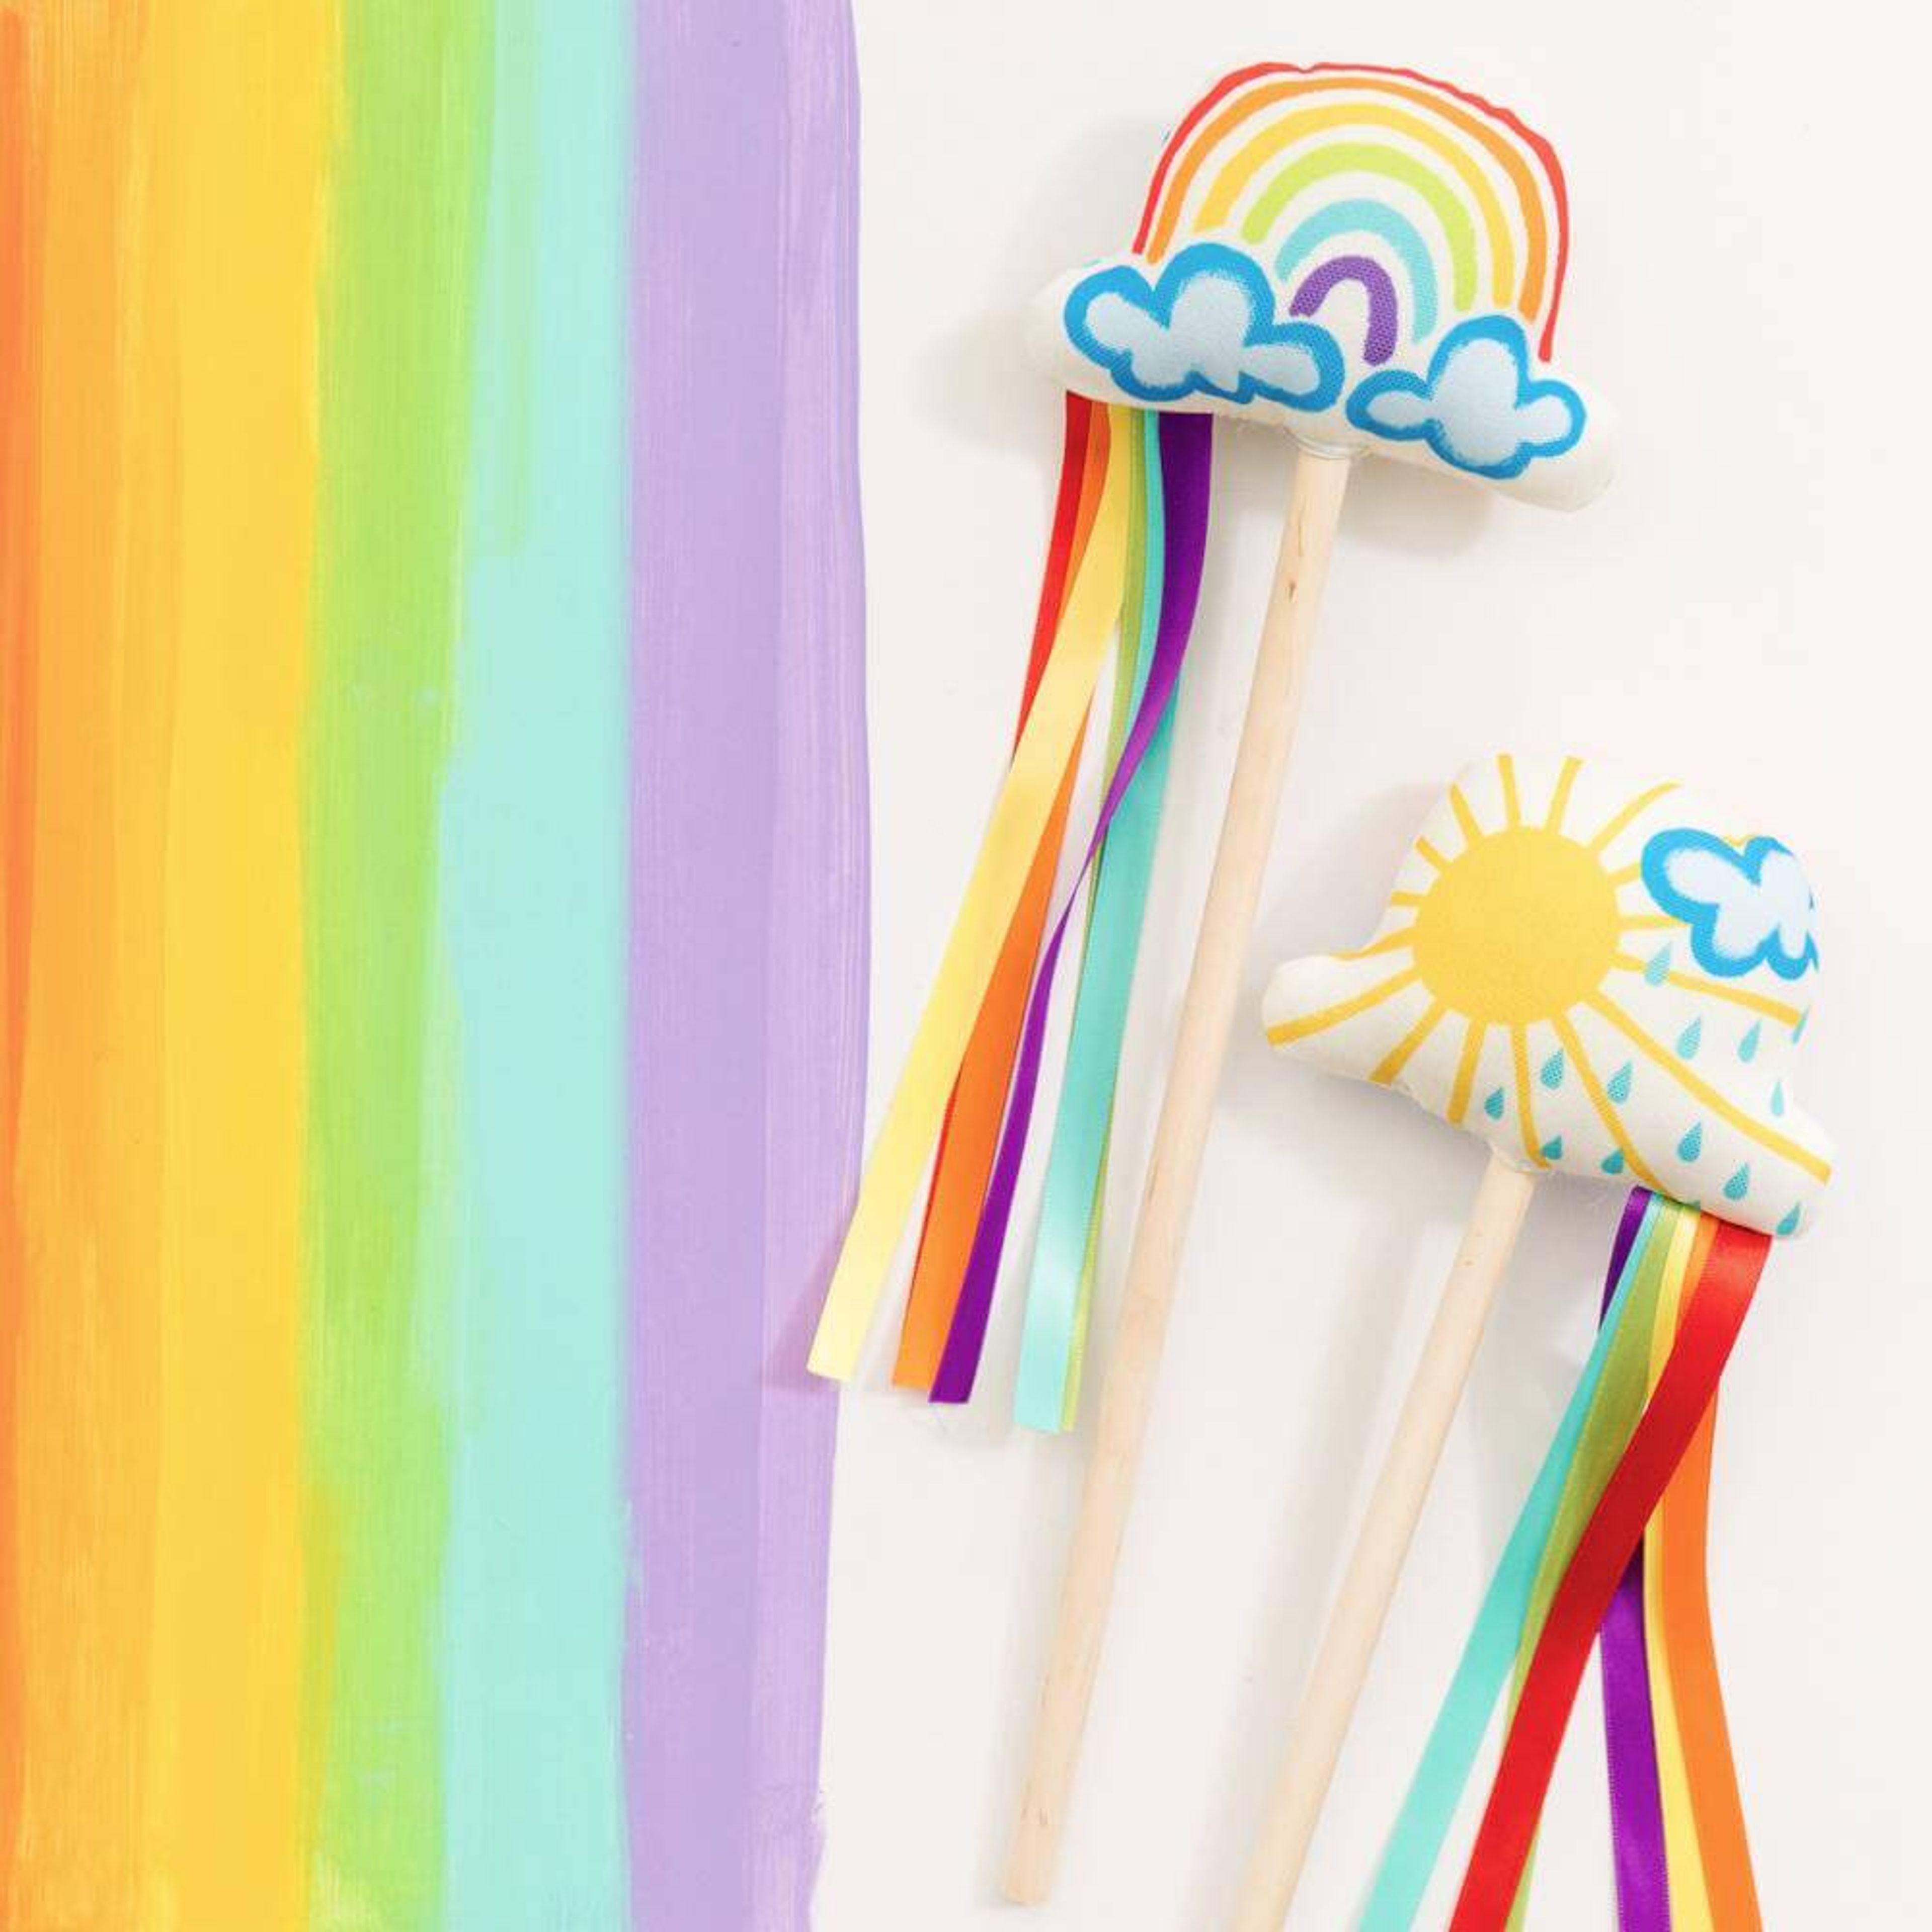 Magic Wand Toy Rainbow: "My niece loves it. Very pretty!"